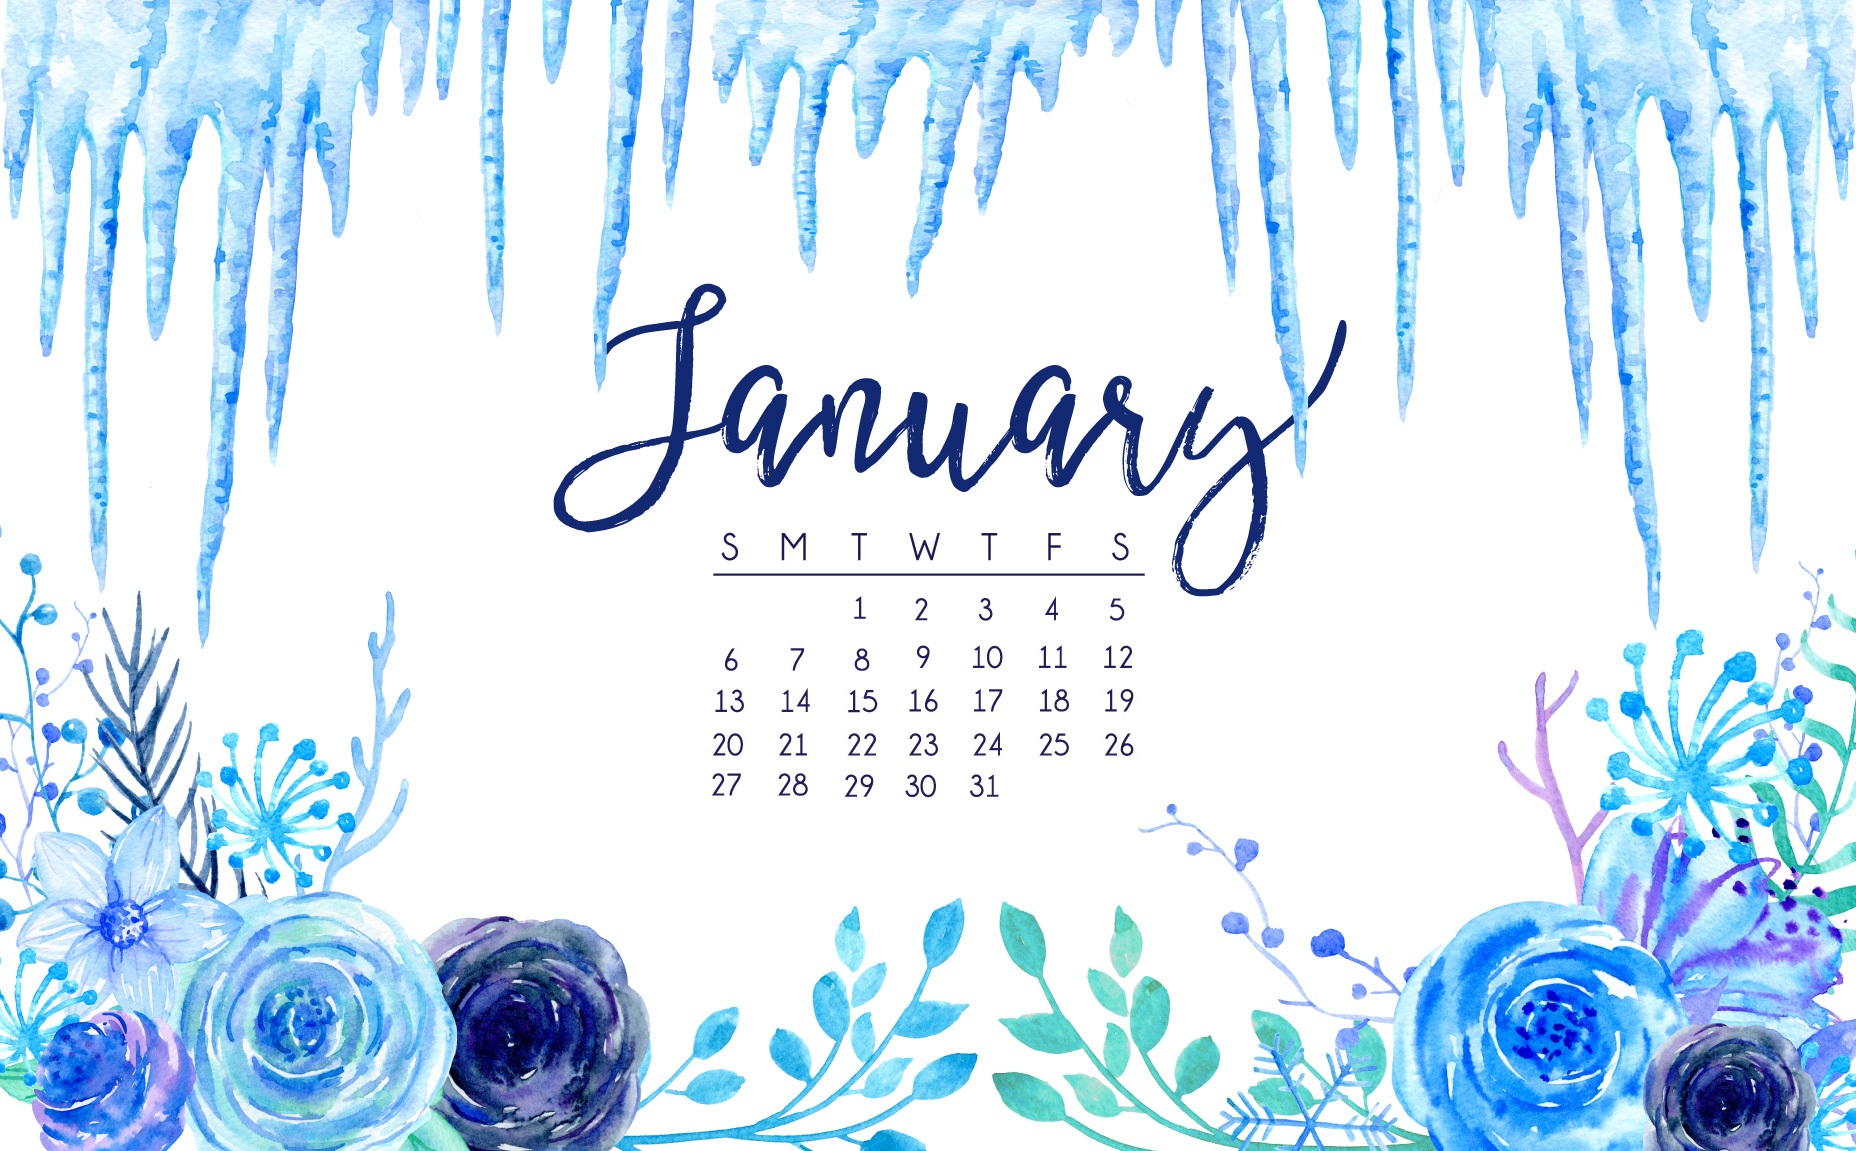 January 2019 HD Calendar Wallpapers Latest Calendar